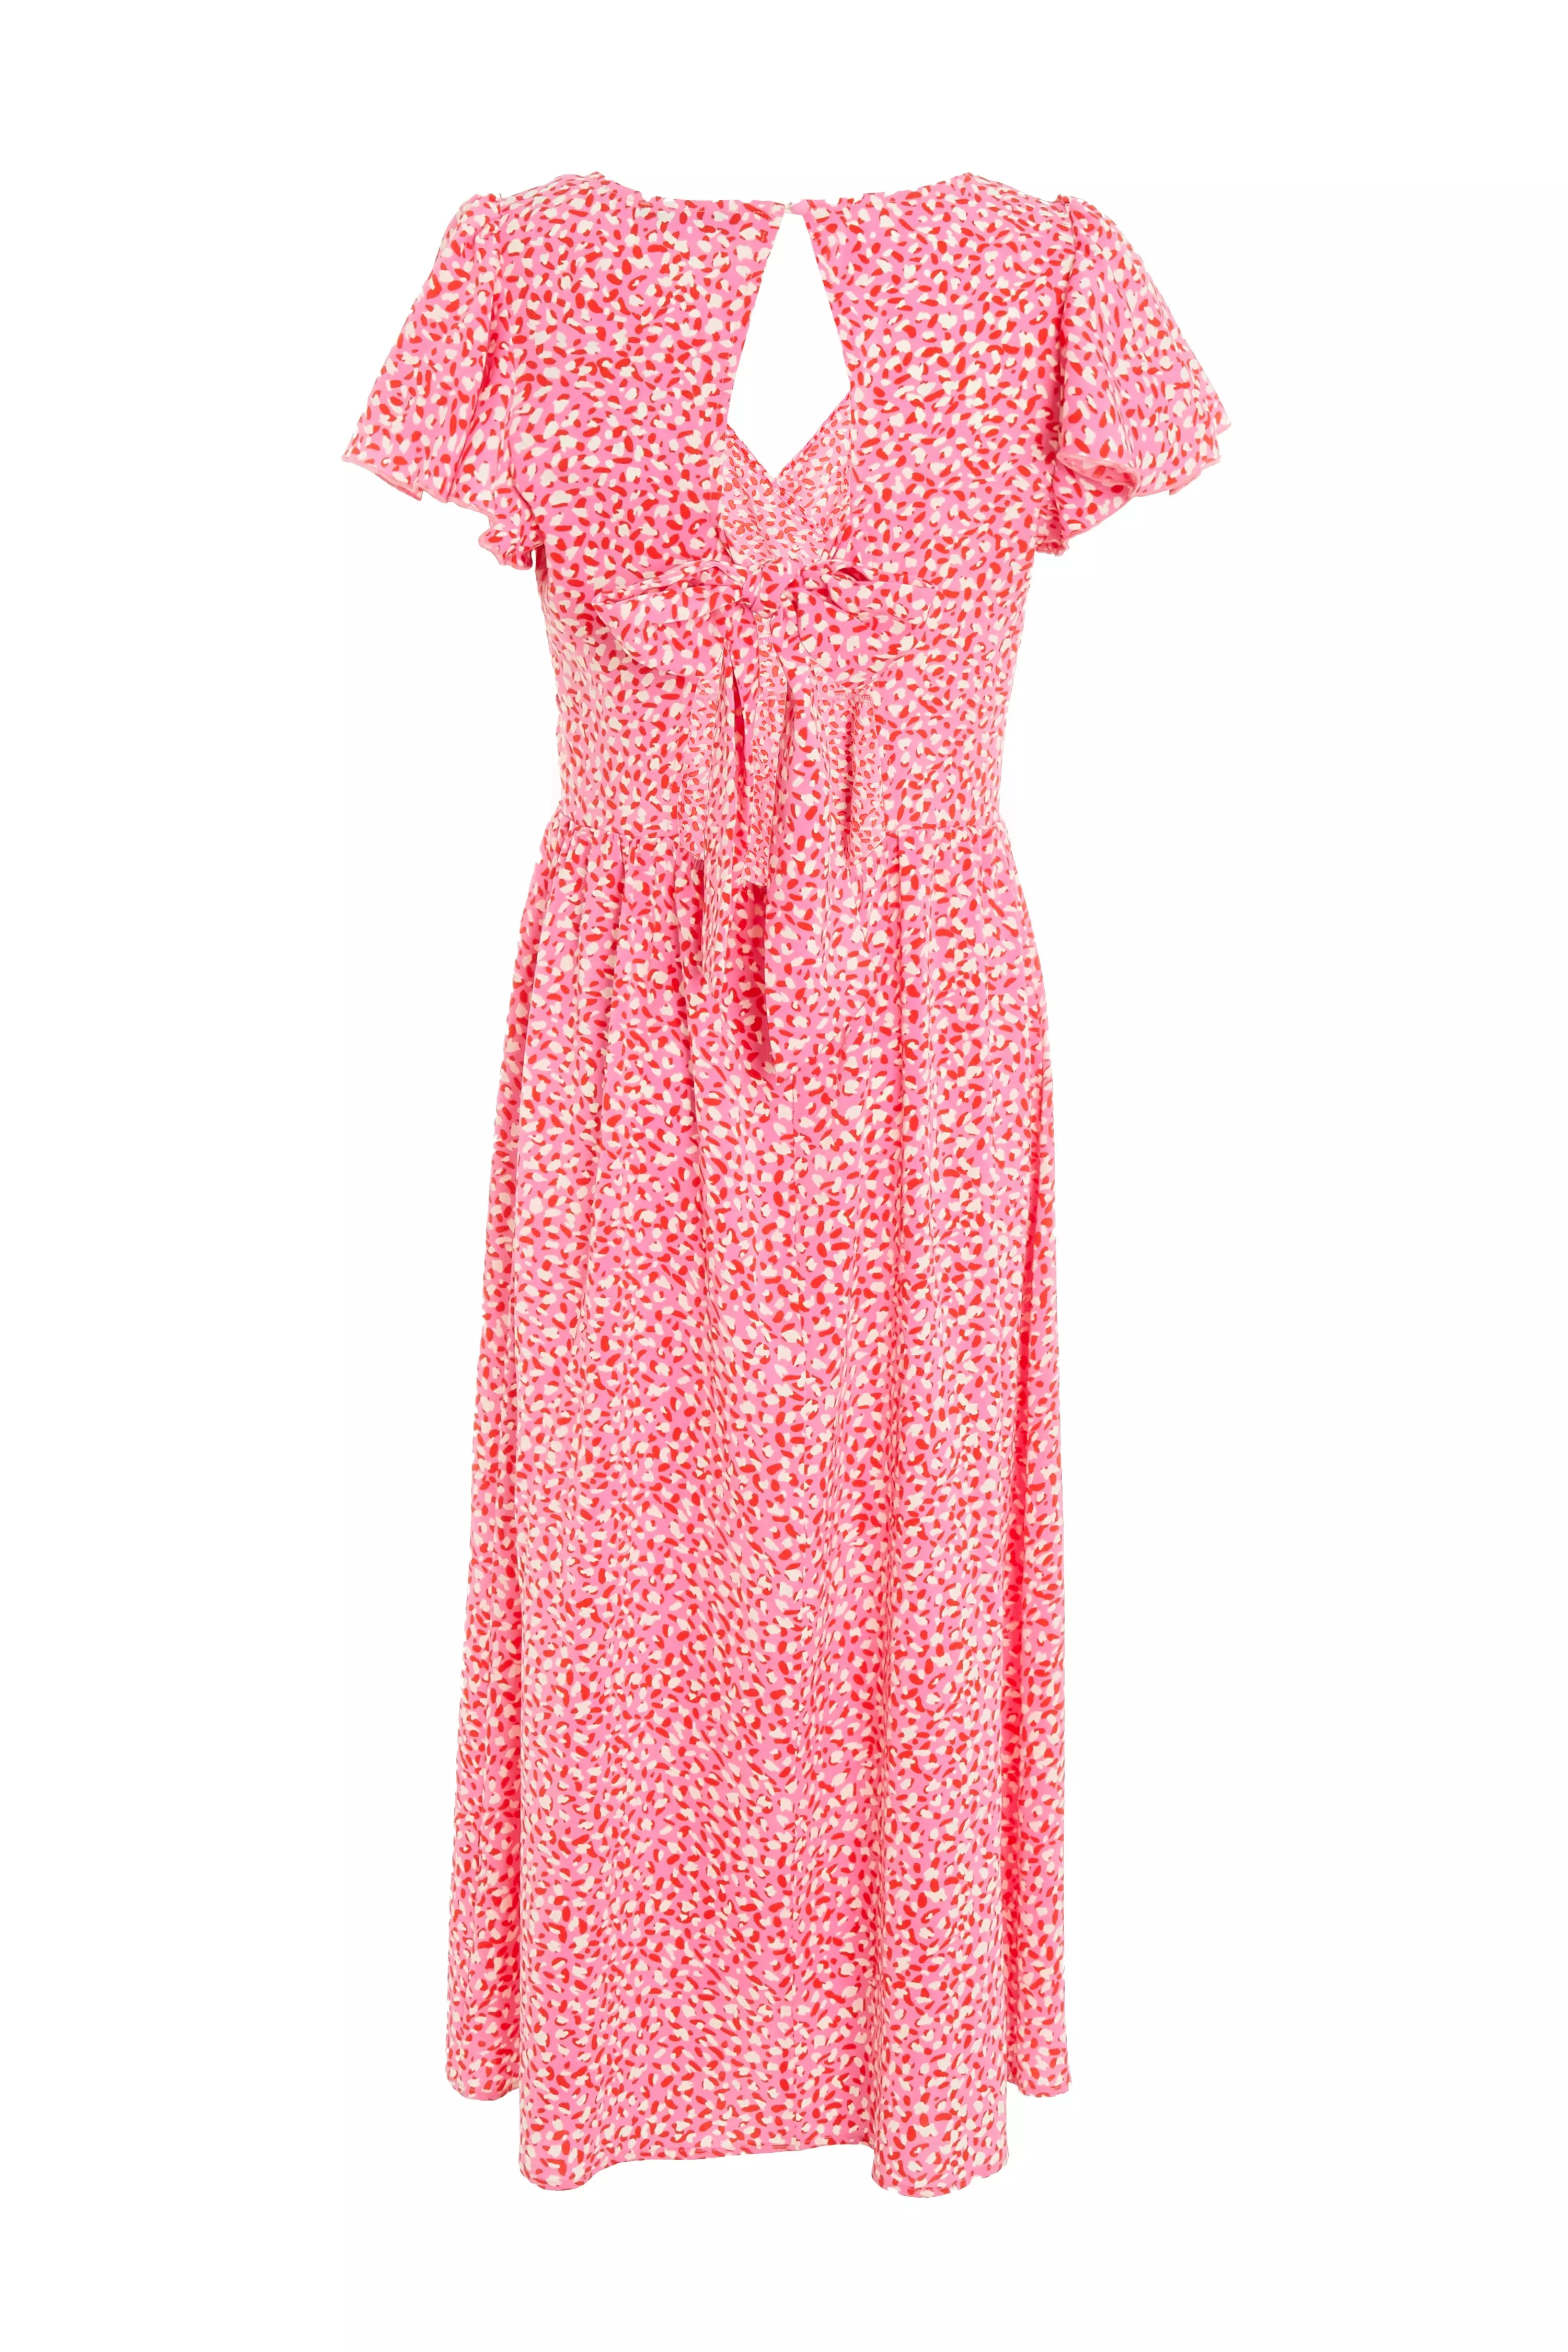 Pink Smudge Print Midi Dress - QUIZ Clothing